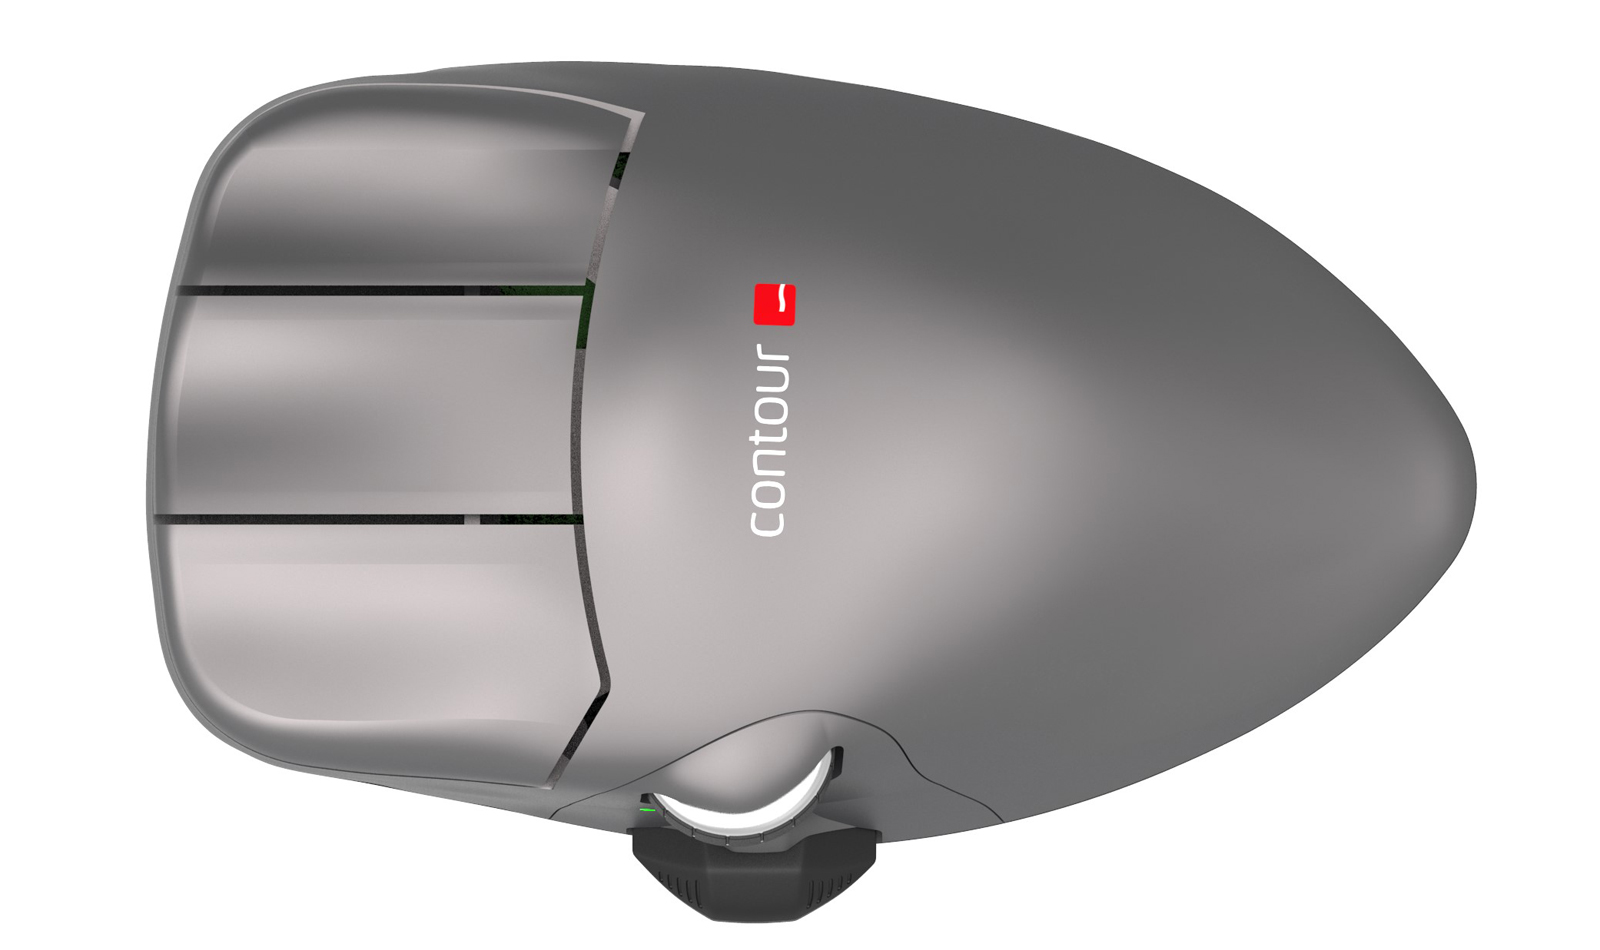 Contour Wireless Mouse